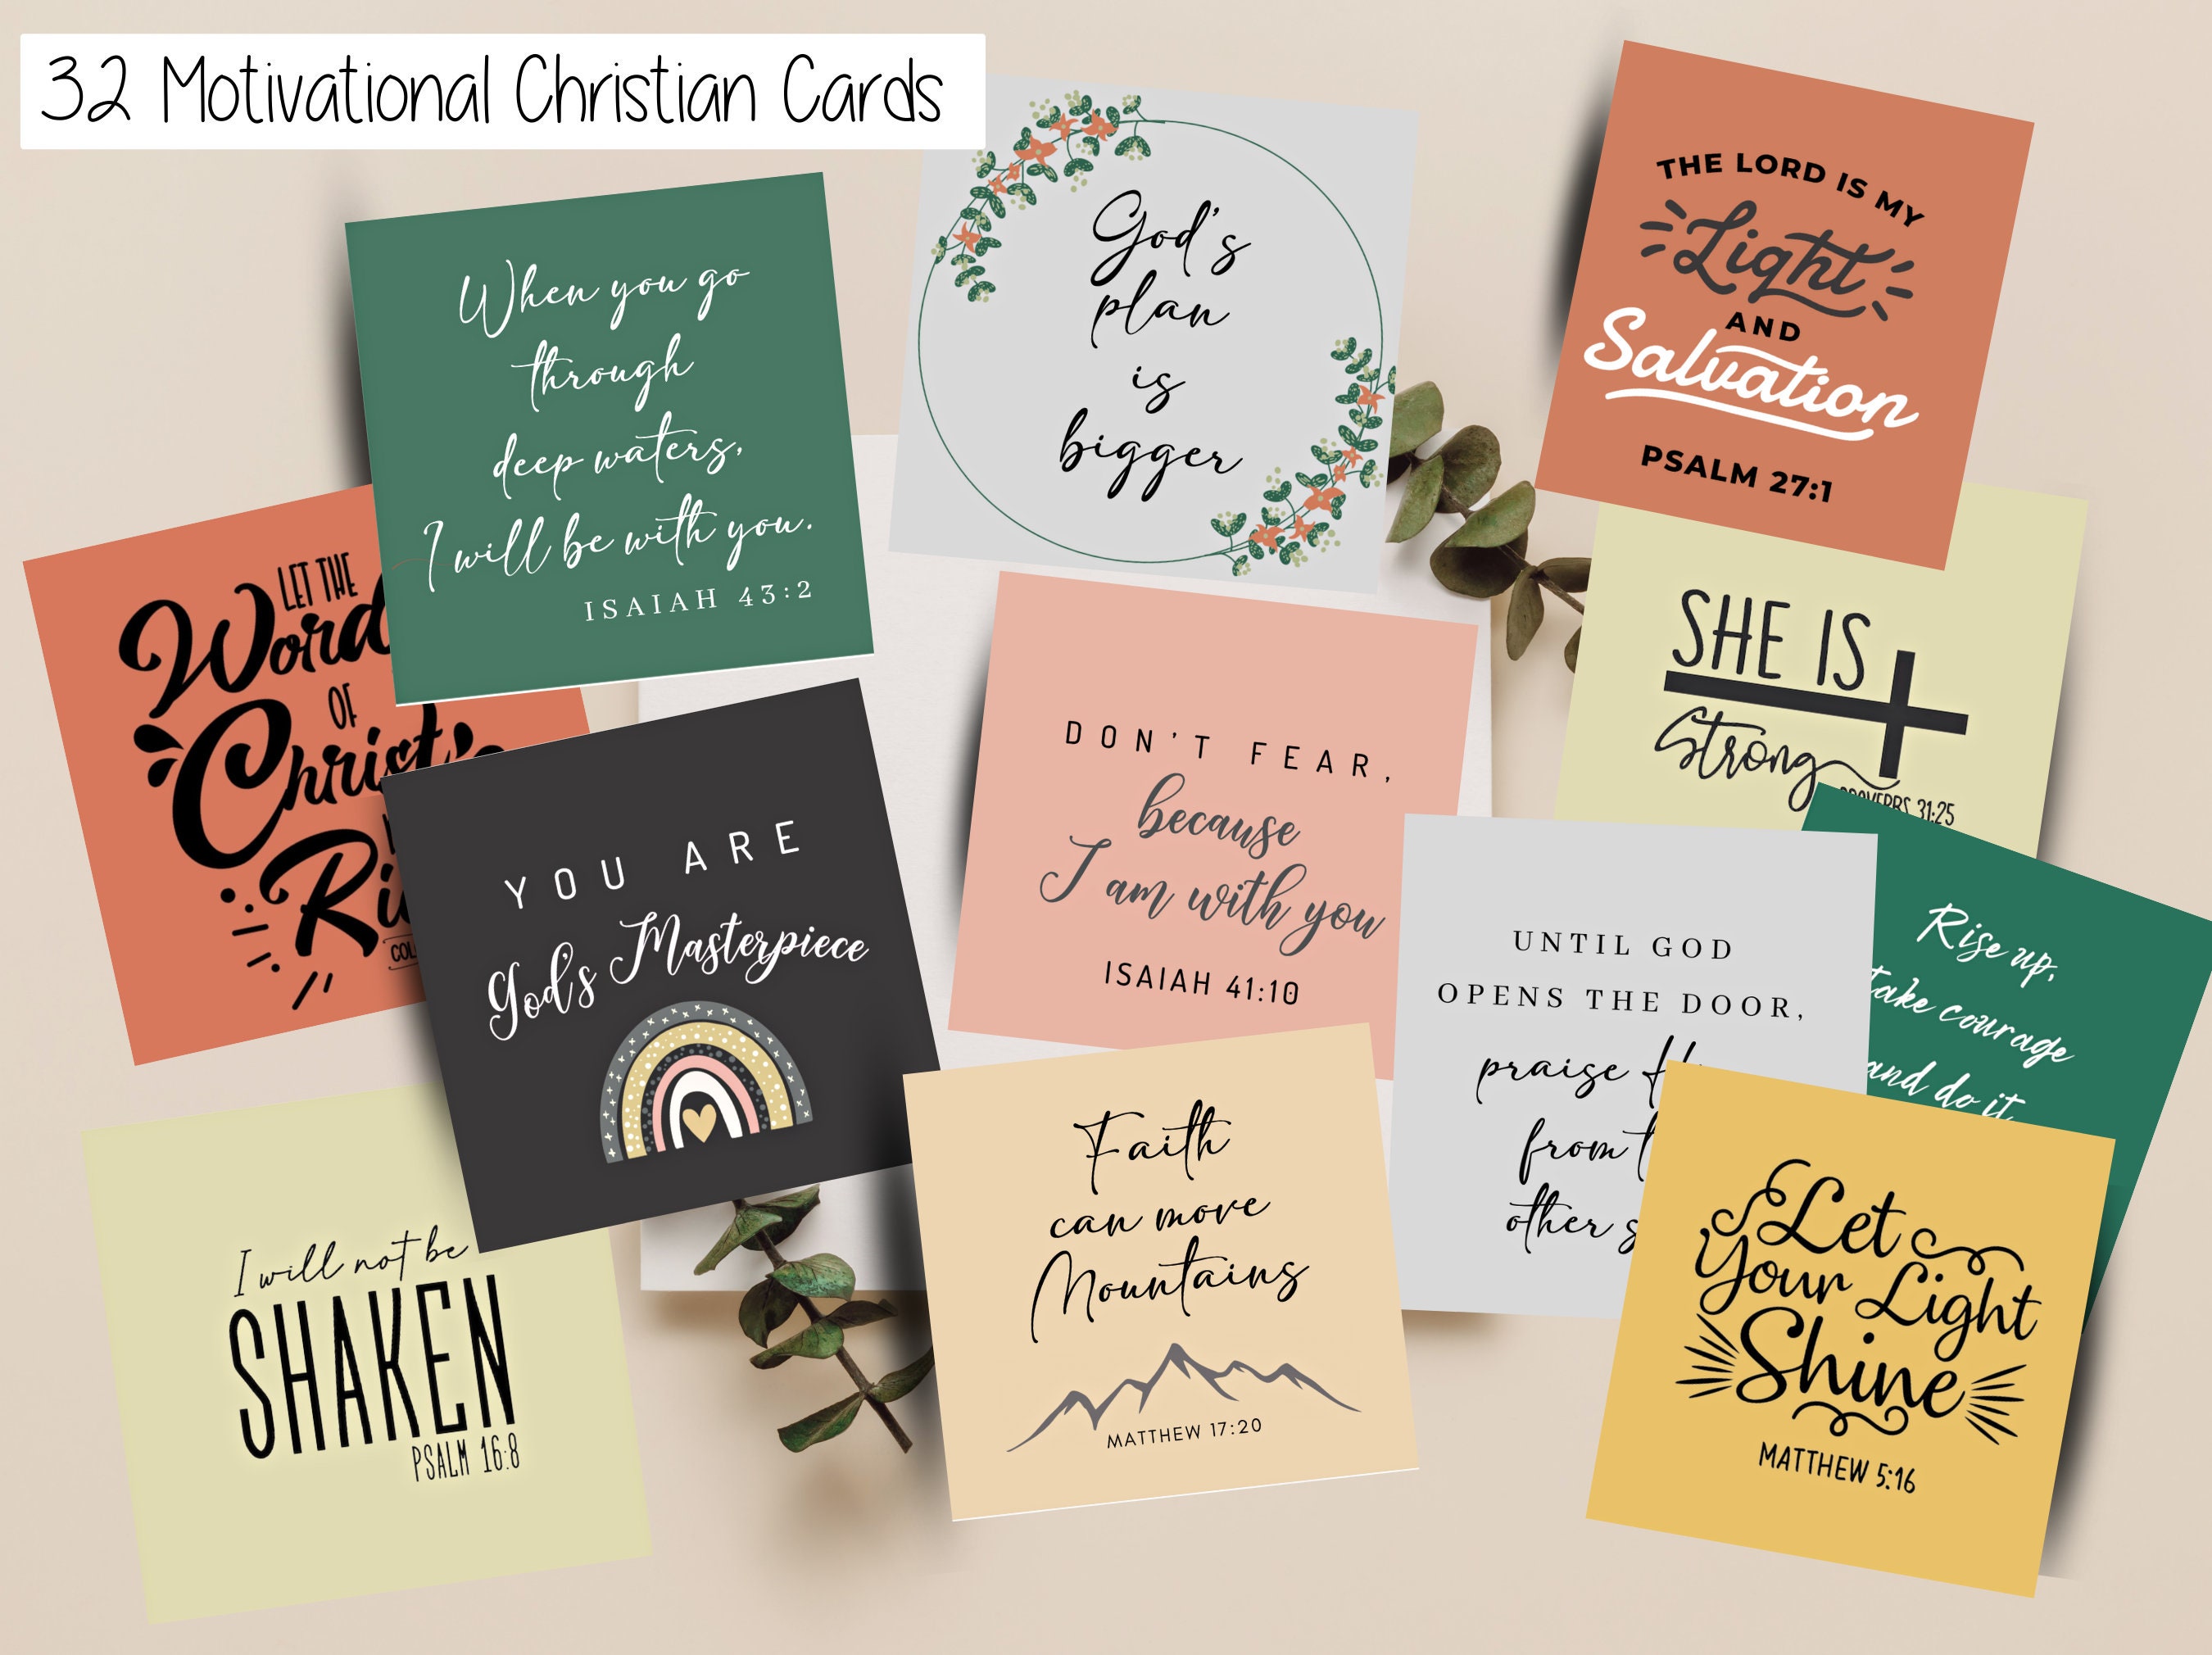 Mini Motivators, Commons Sense Faith, Mini Scripture Cards – Truepost Inc.